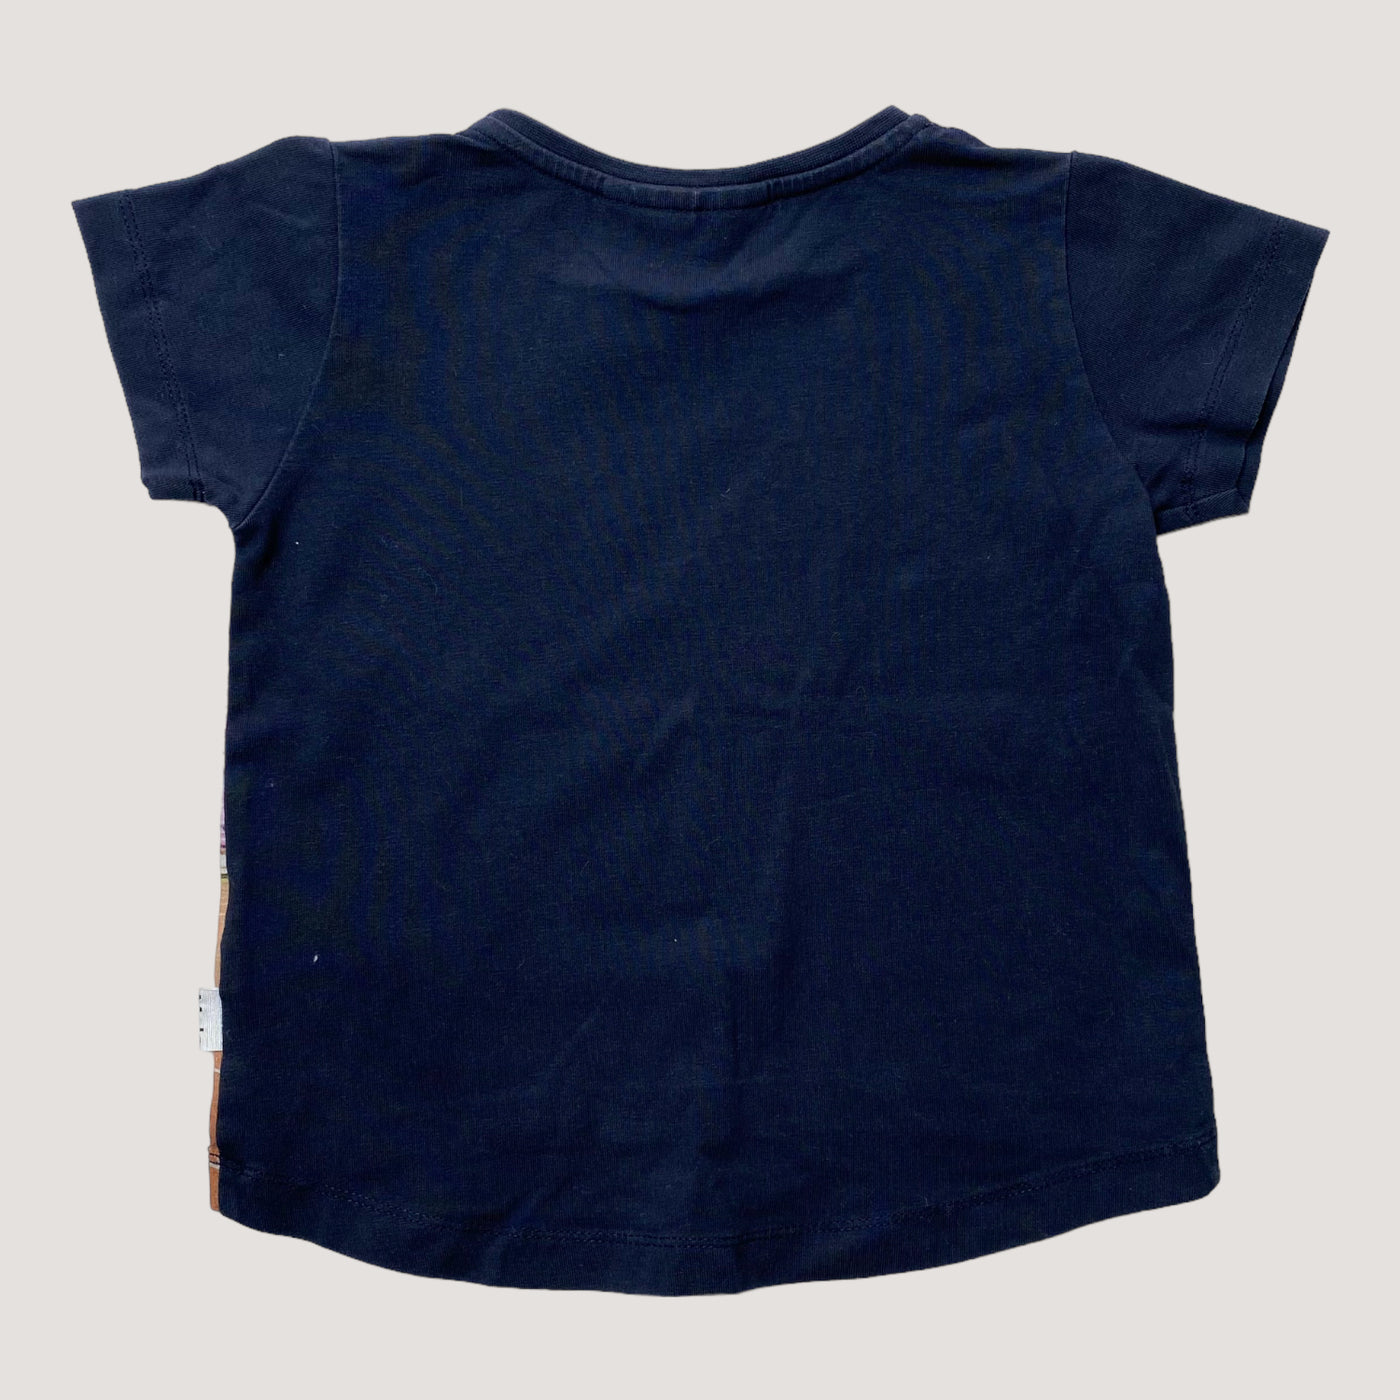 Molo risha t-shirt, your own pace | 98cm